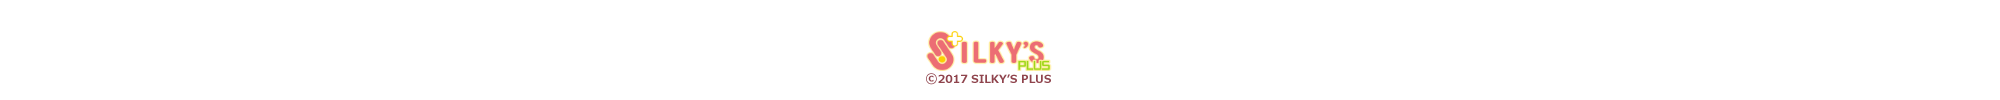 (c) 2018 SILKY'S PLUS